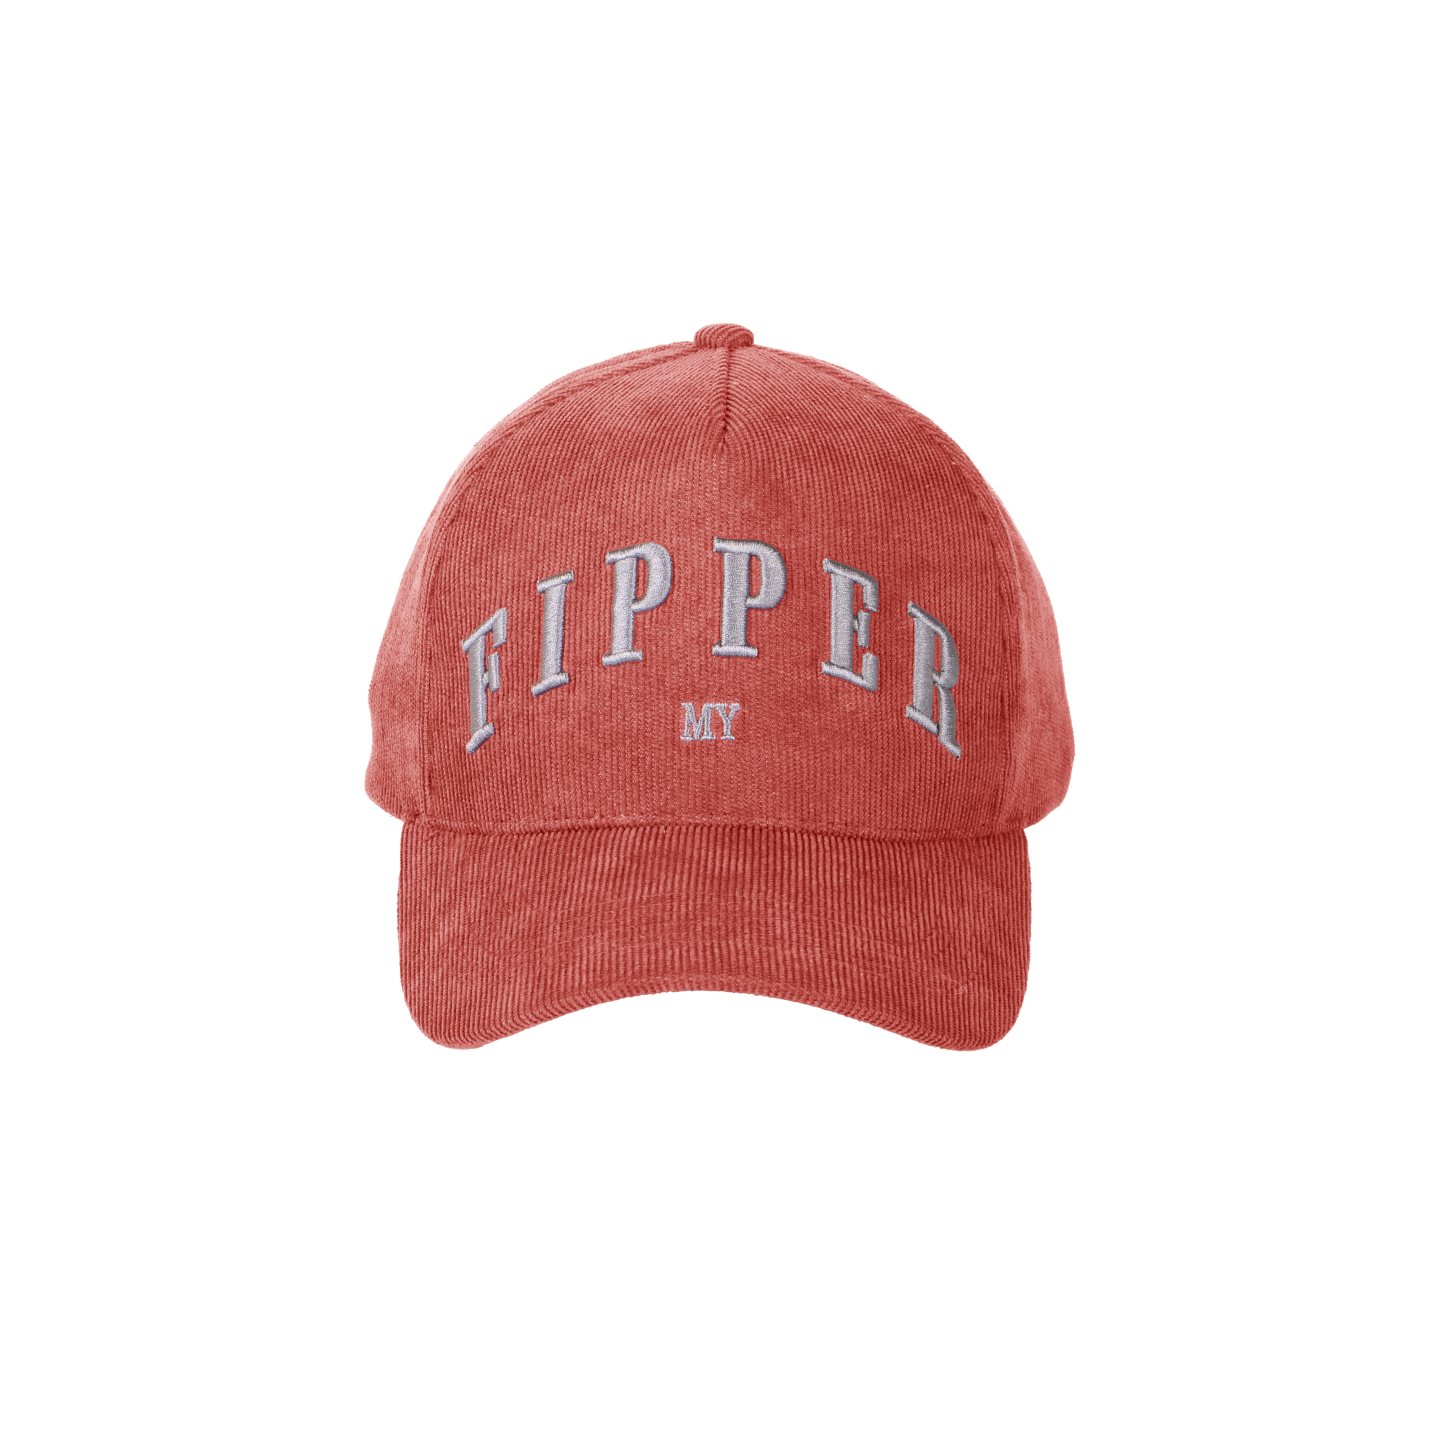 Fipper Headgear Corduroy Adjustable Cap Fipper in Pink (Coral)